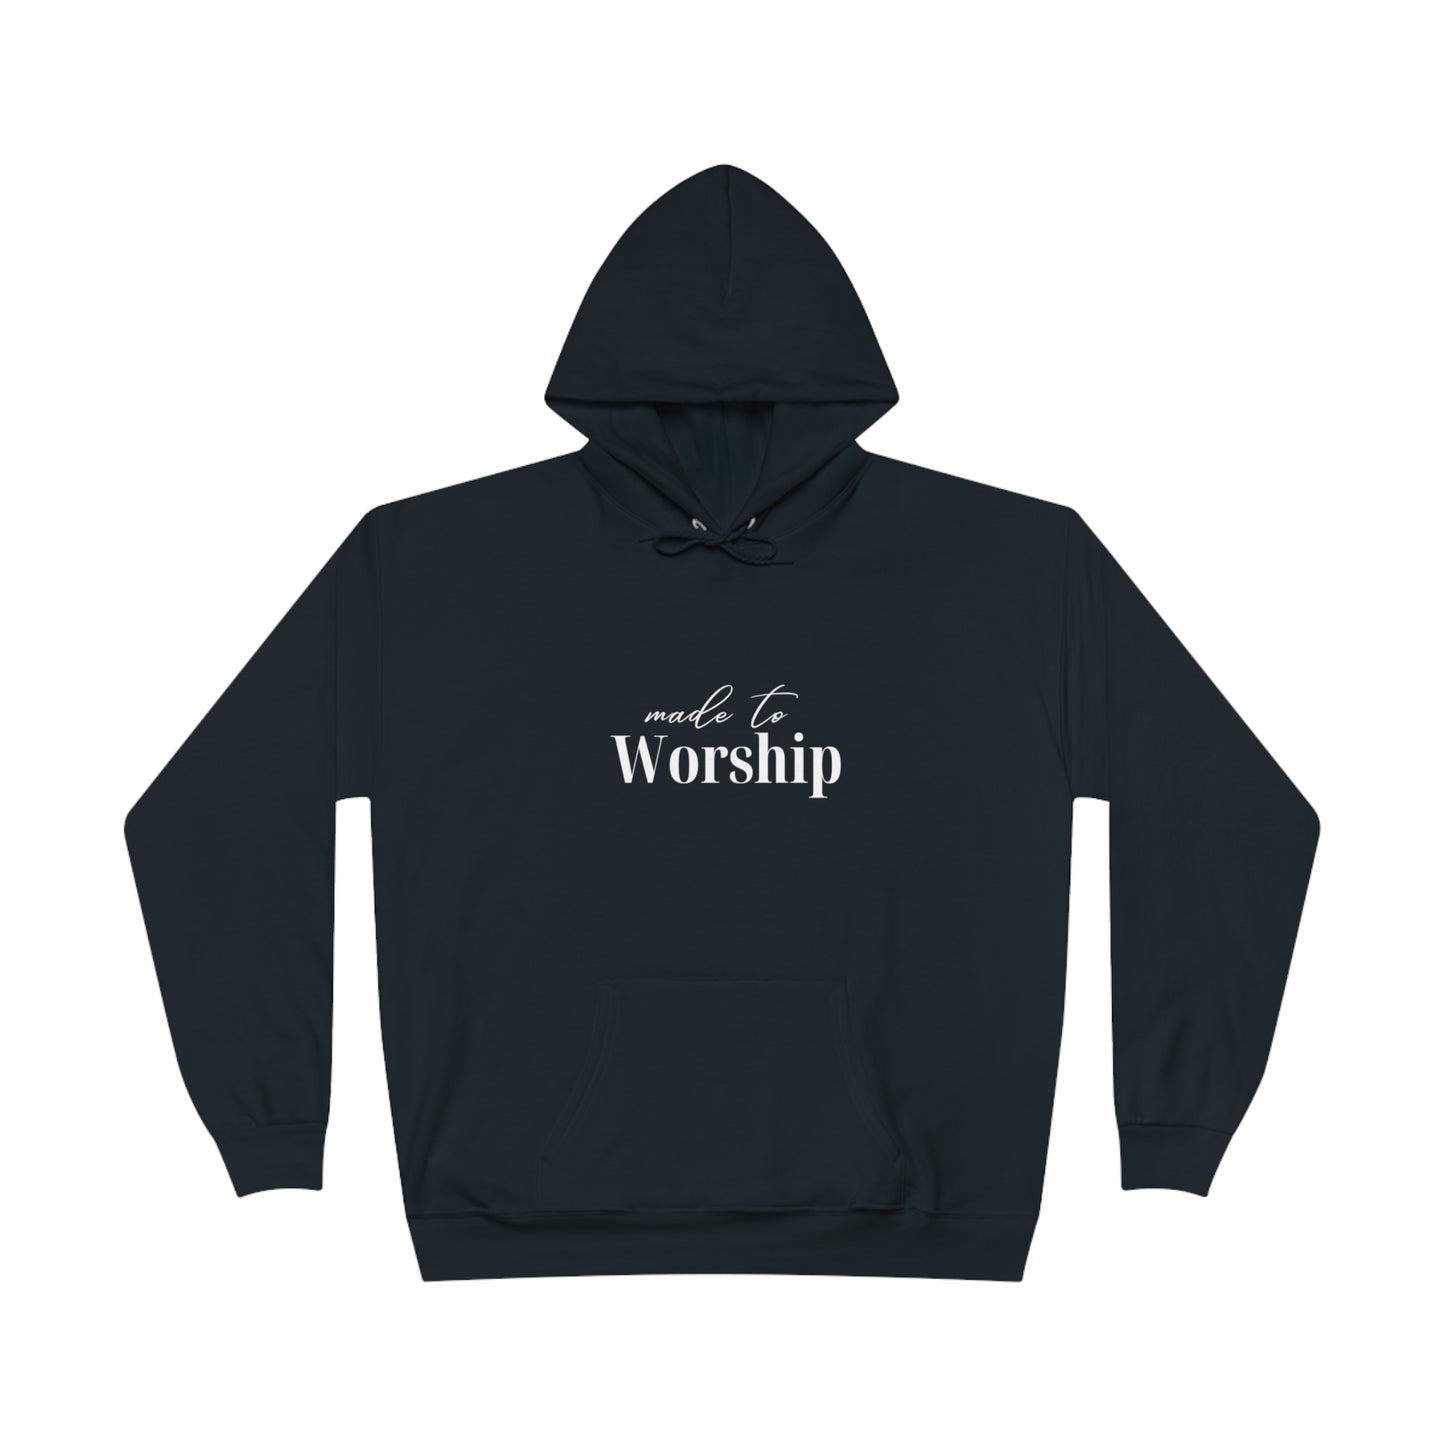 "Made To Worship" Hoodie - SIDNEY DREAMS, L.L.C.